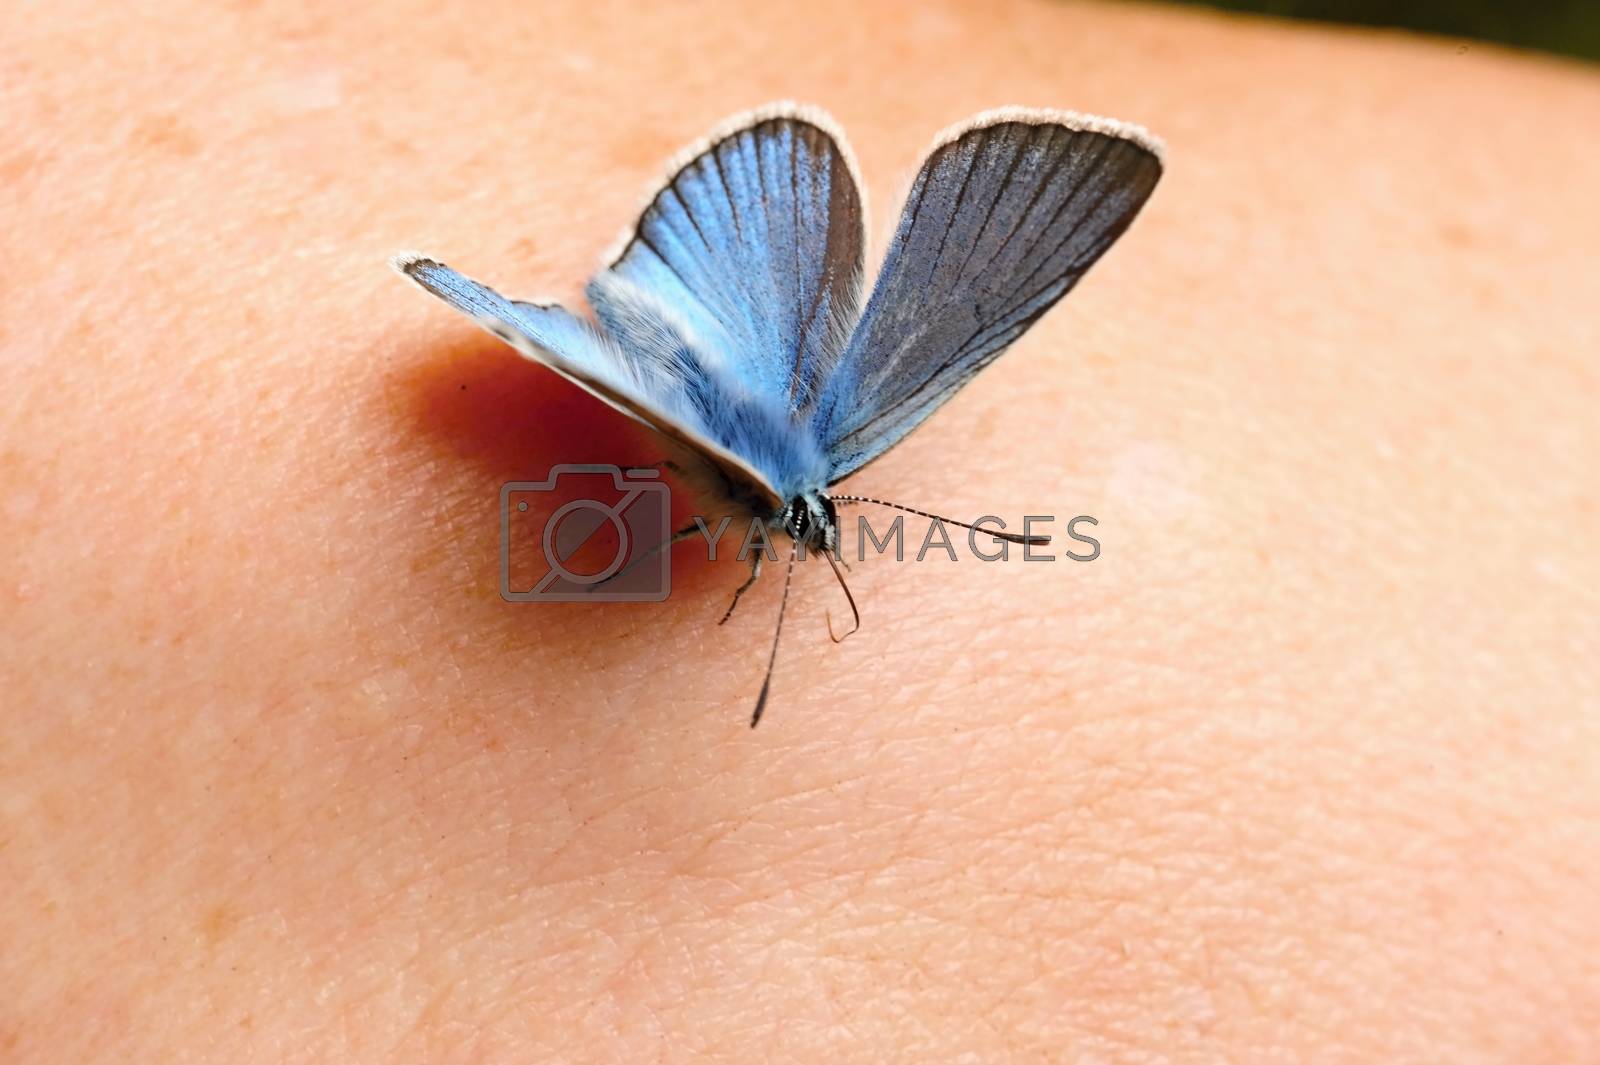 Royalty free image of Little blue butterfly by ondrej83